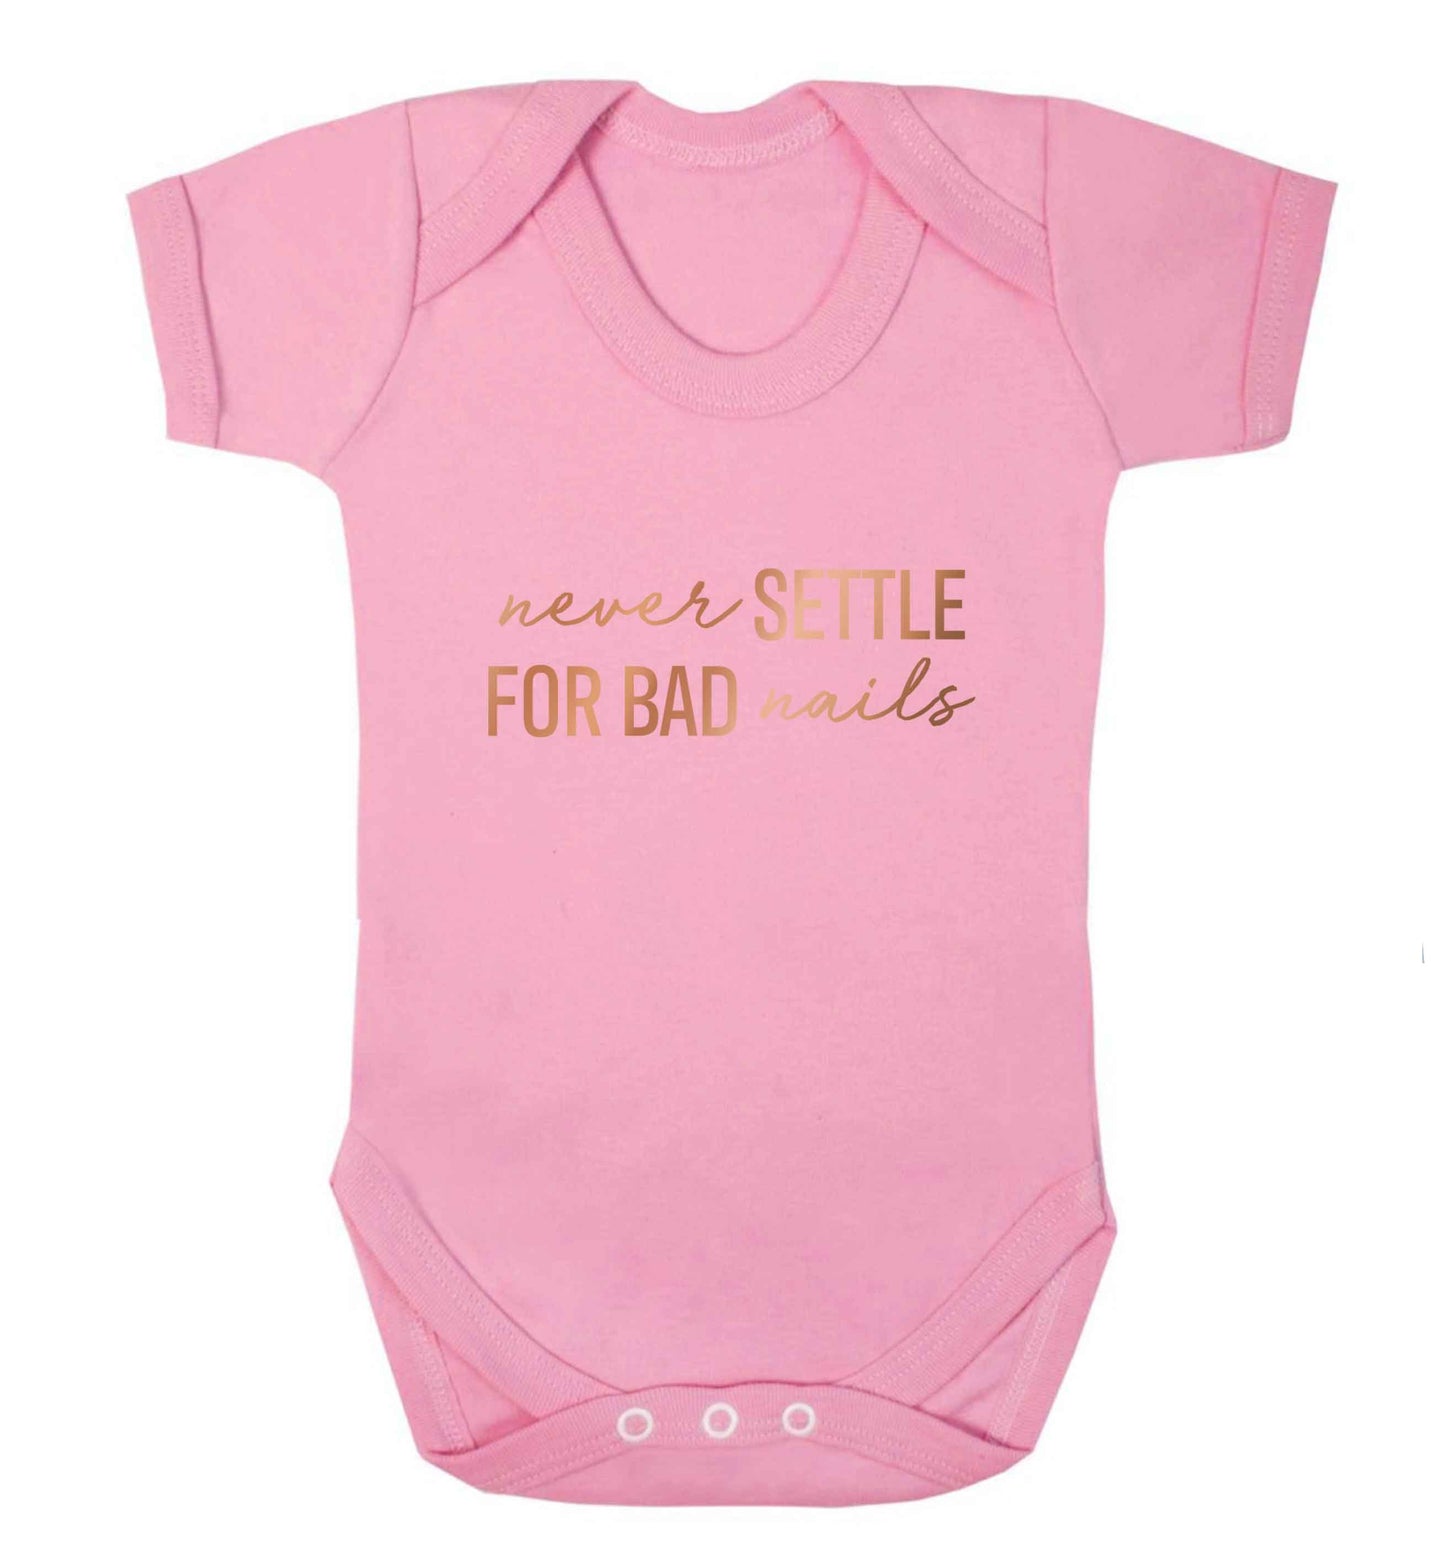 Never settle for bad nails - rose gold baby vest pale pink 18-24 months